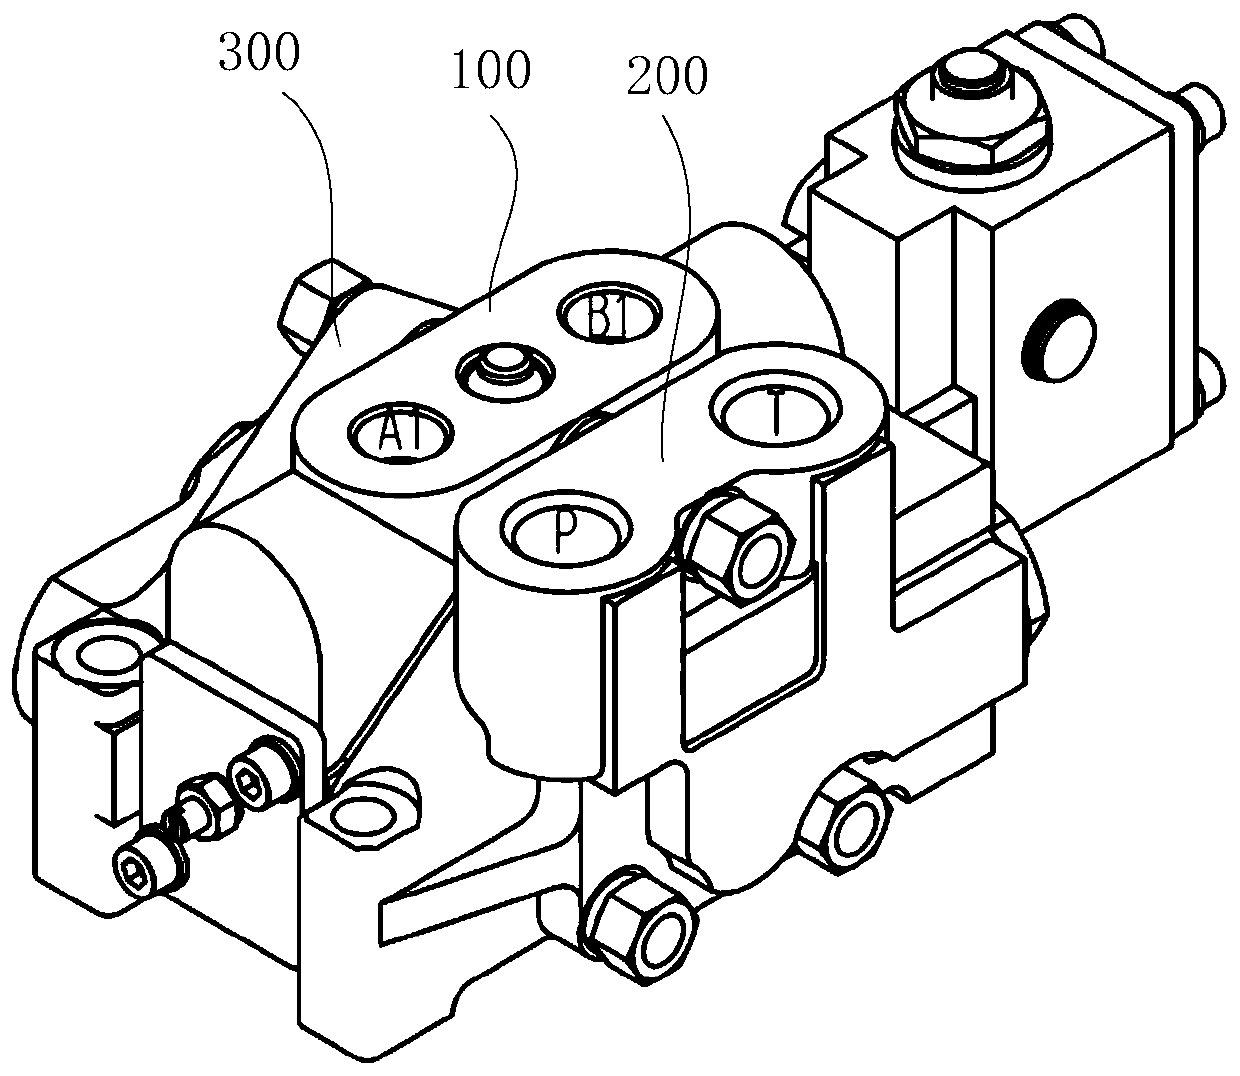 Oil port pressure adjustable reversing valve and valve block for hydraulic steering system